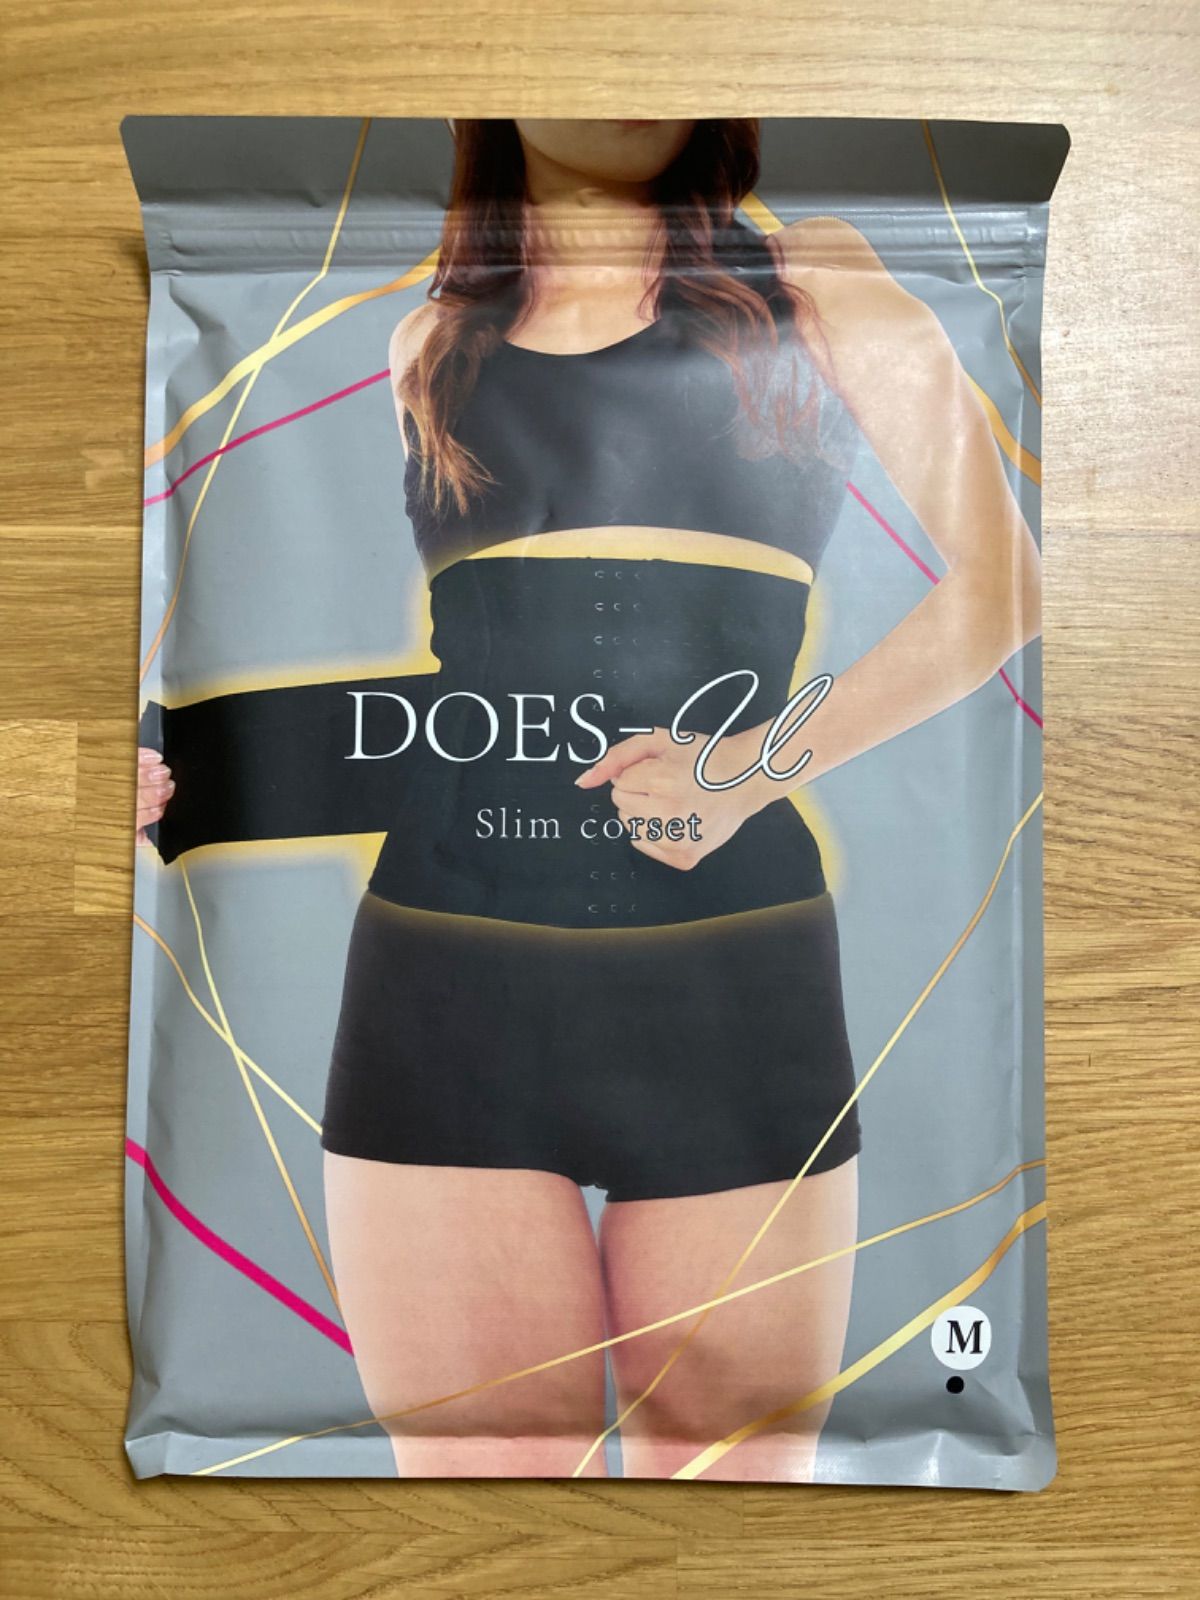 DOES-U slim corset Mサイズ | www.pvi.ne